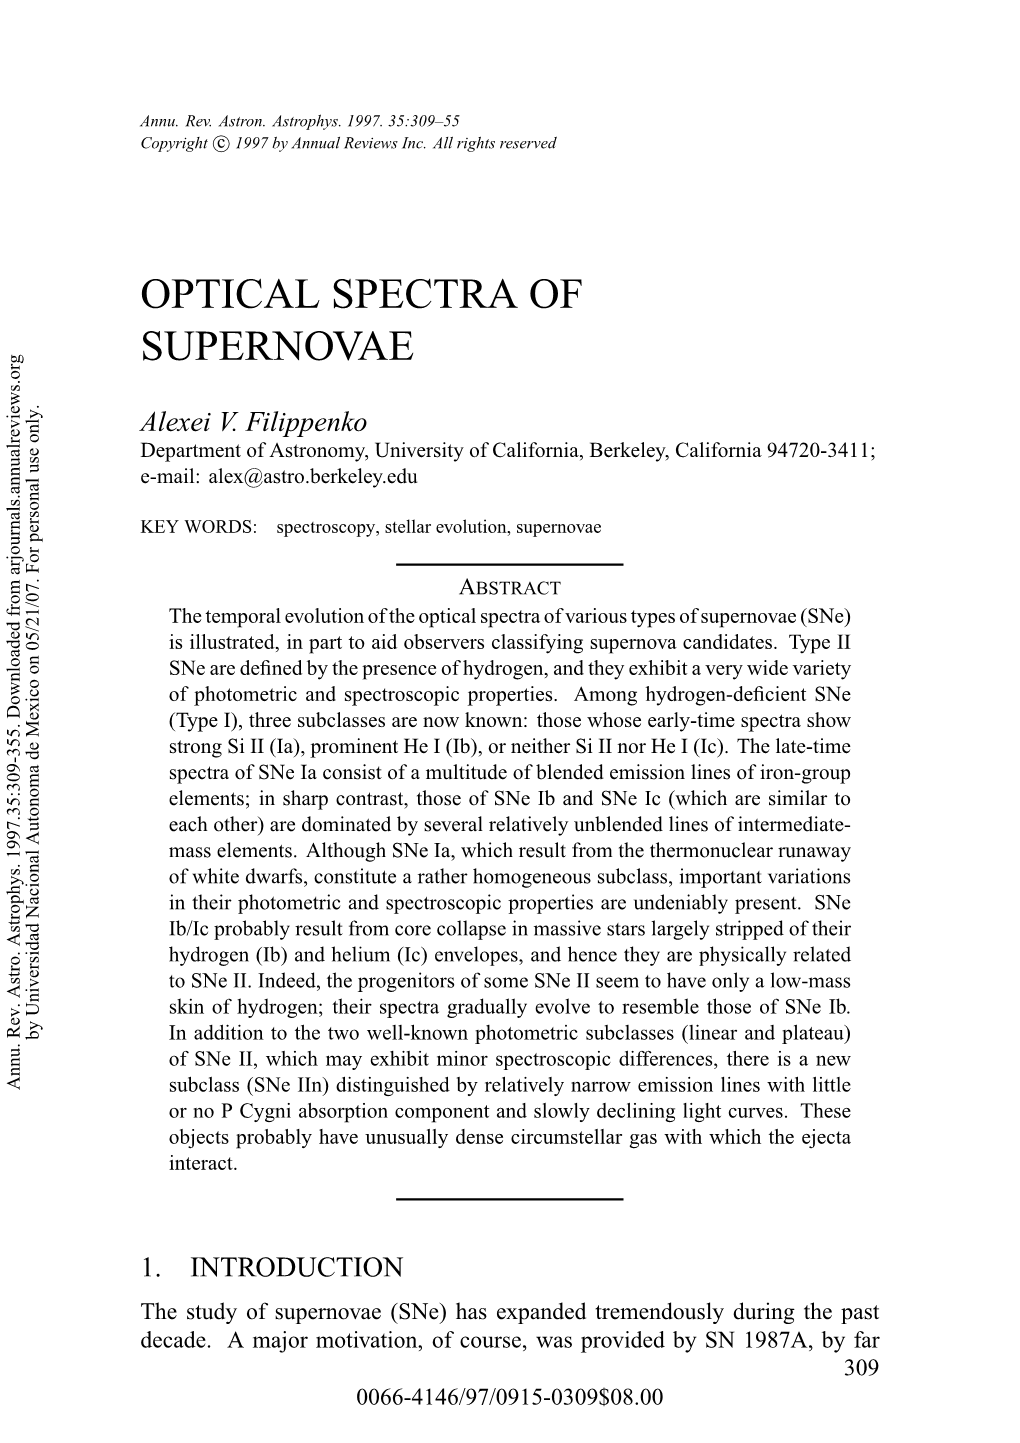 Optical Spectra of Supernovae